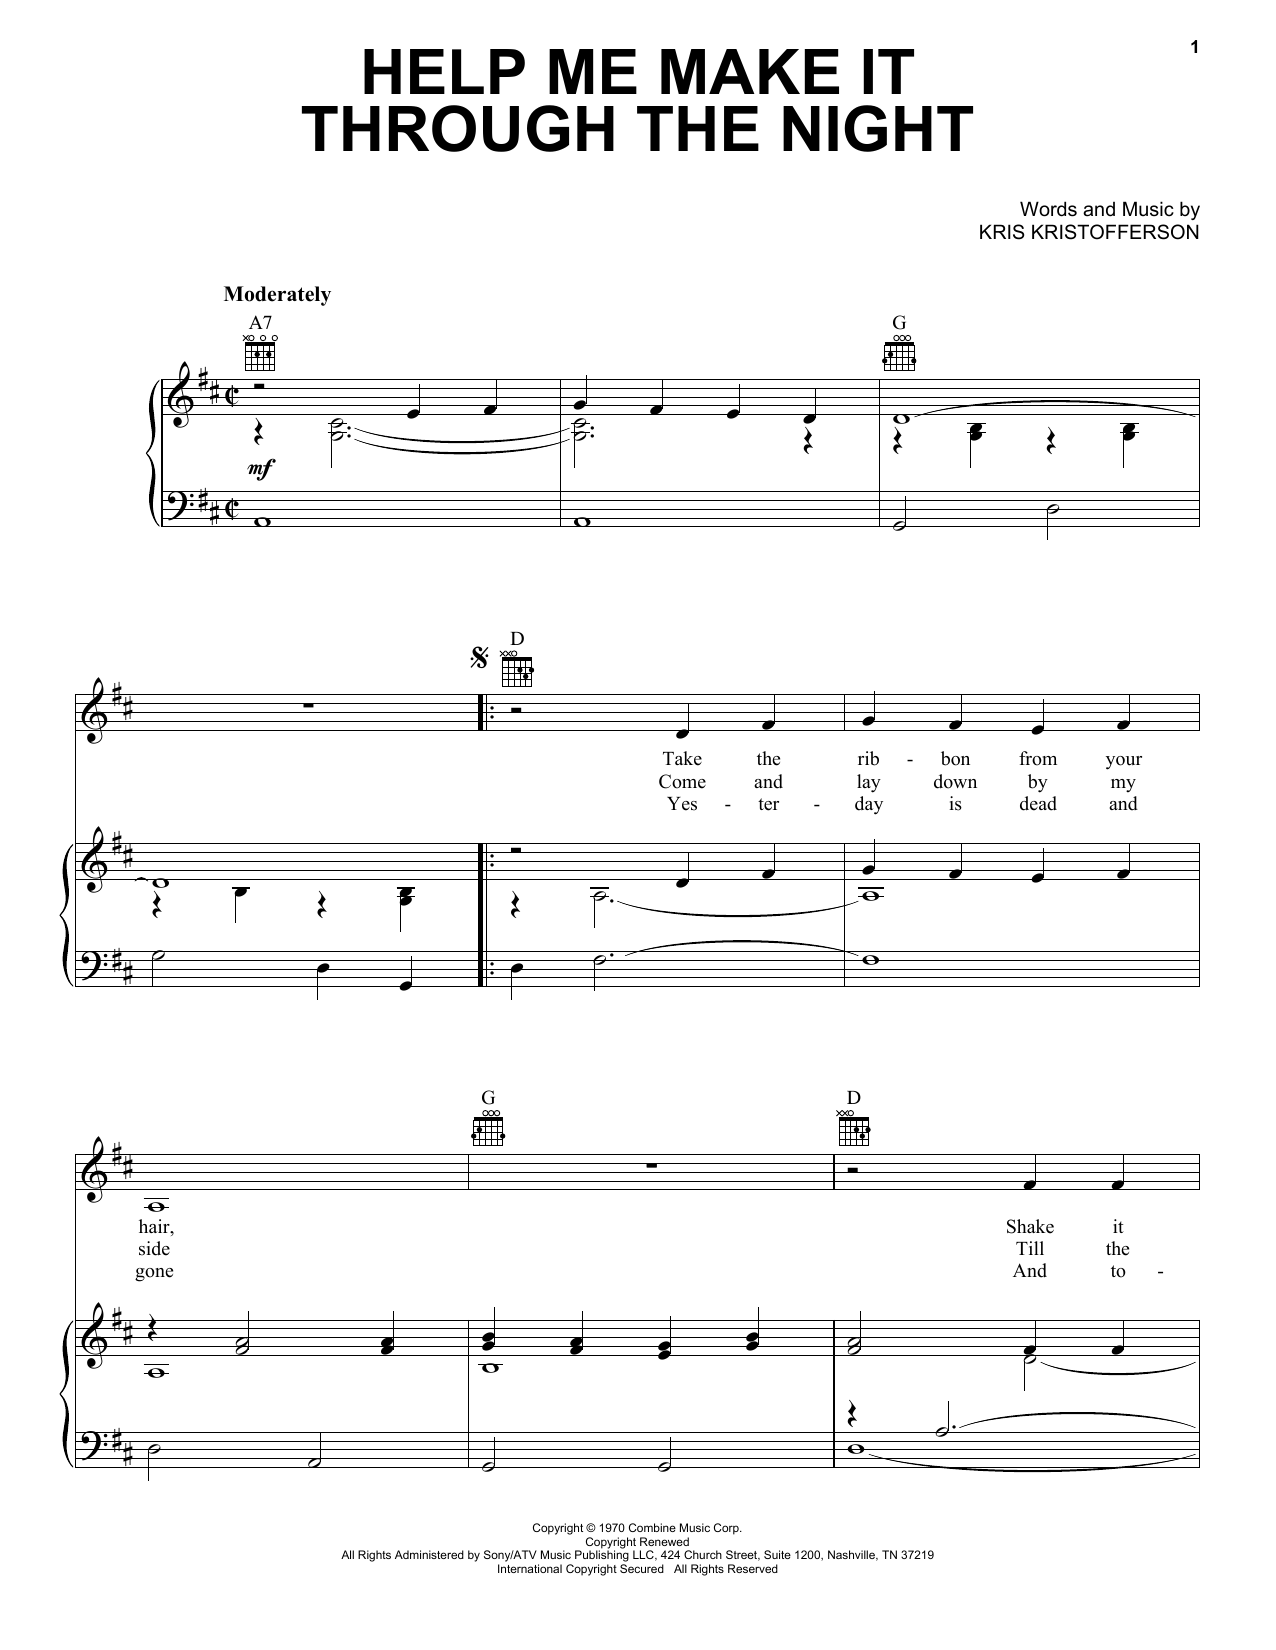 Kris Kristofferson Help Me Make It Through The Night Sheet Music Notes & Chords for Accordion - Download or Print PDF